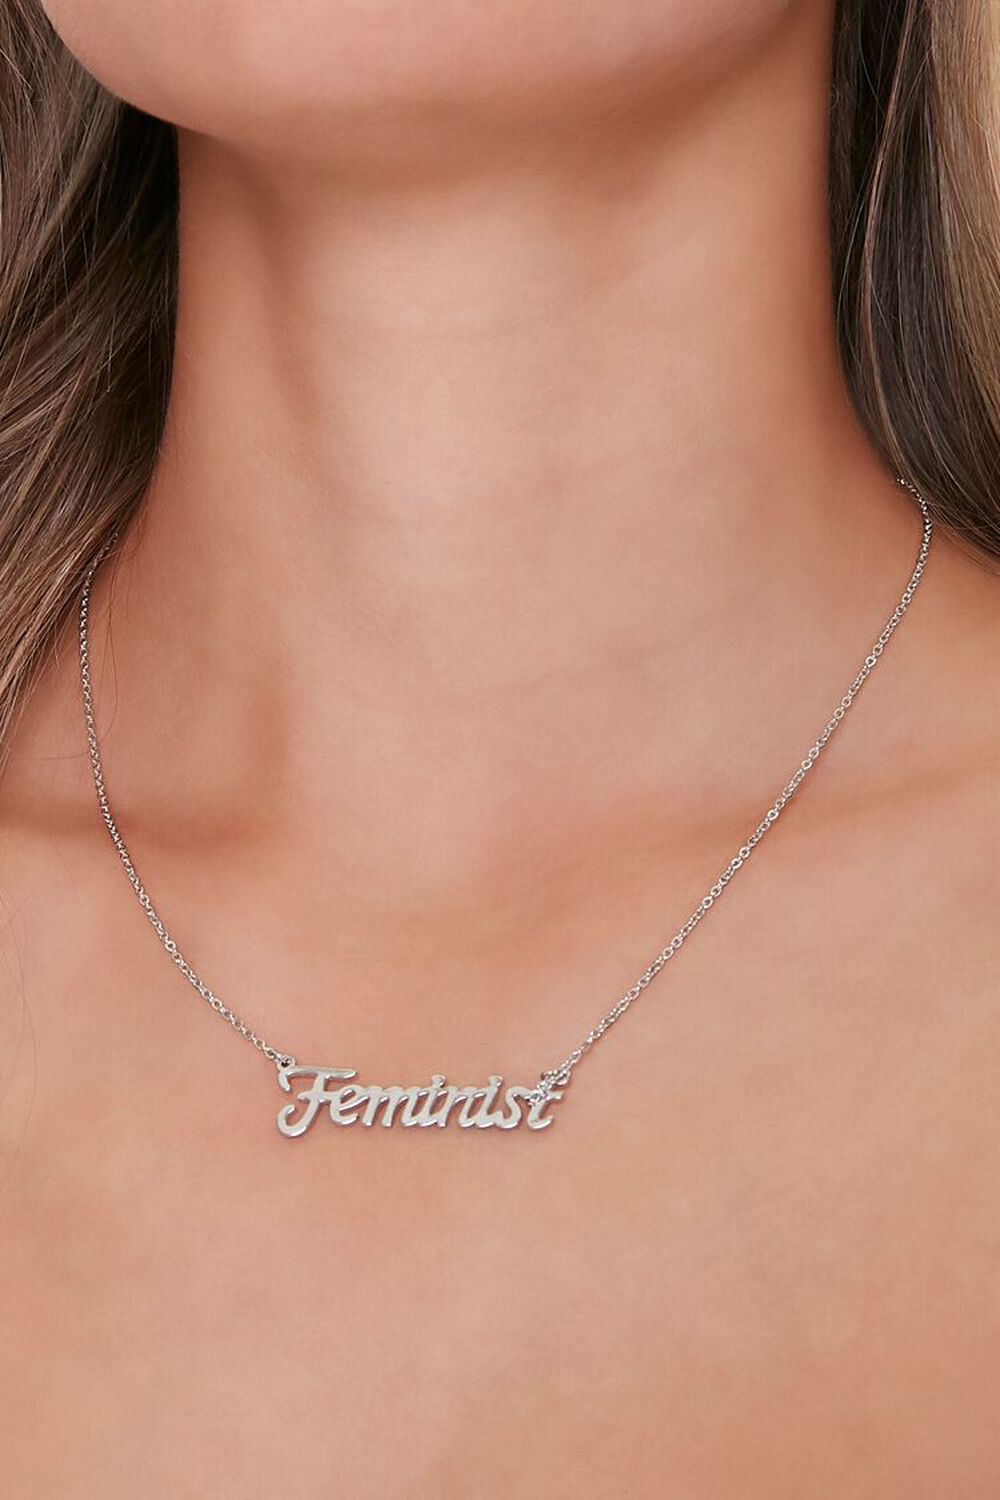 SILVER Feminist Pendant Necklace, image 1